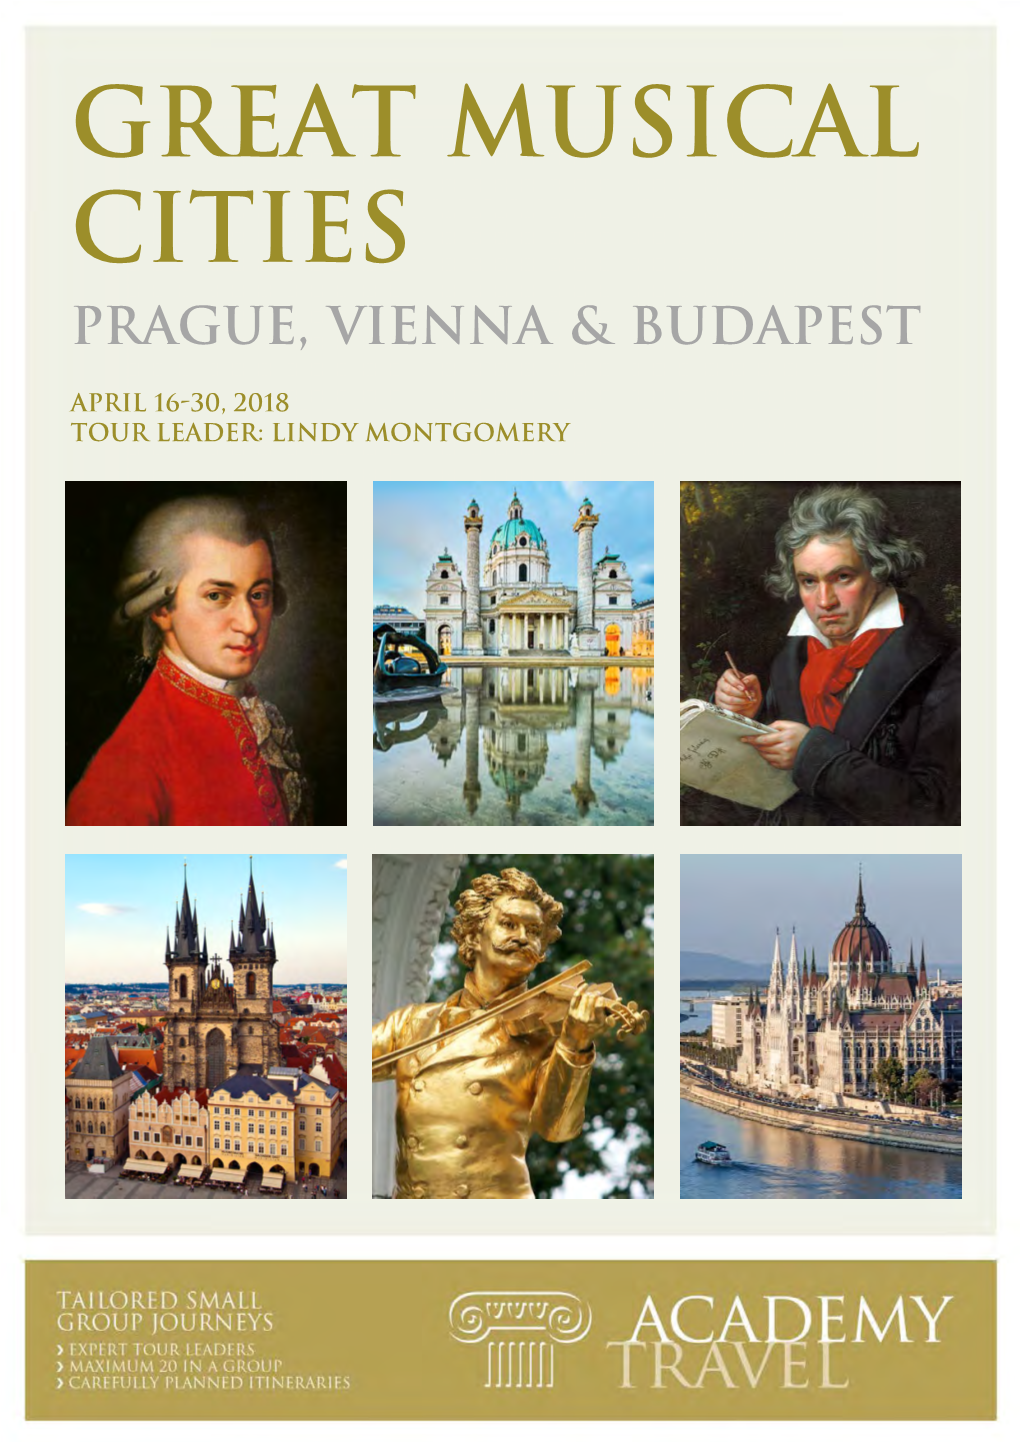 Great Musical Cities Prague, Vienna & Budapest